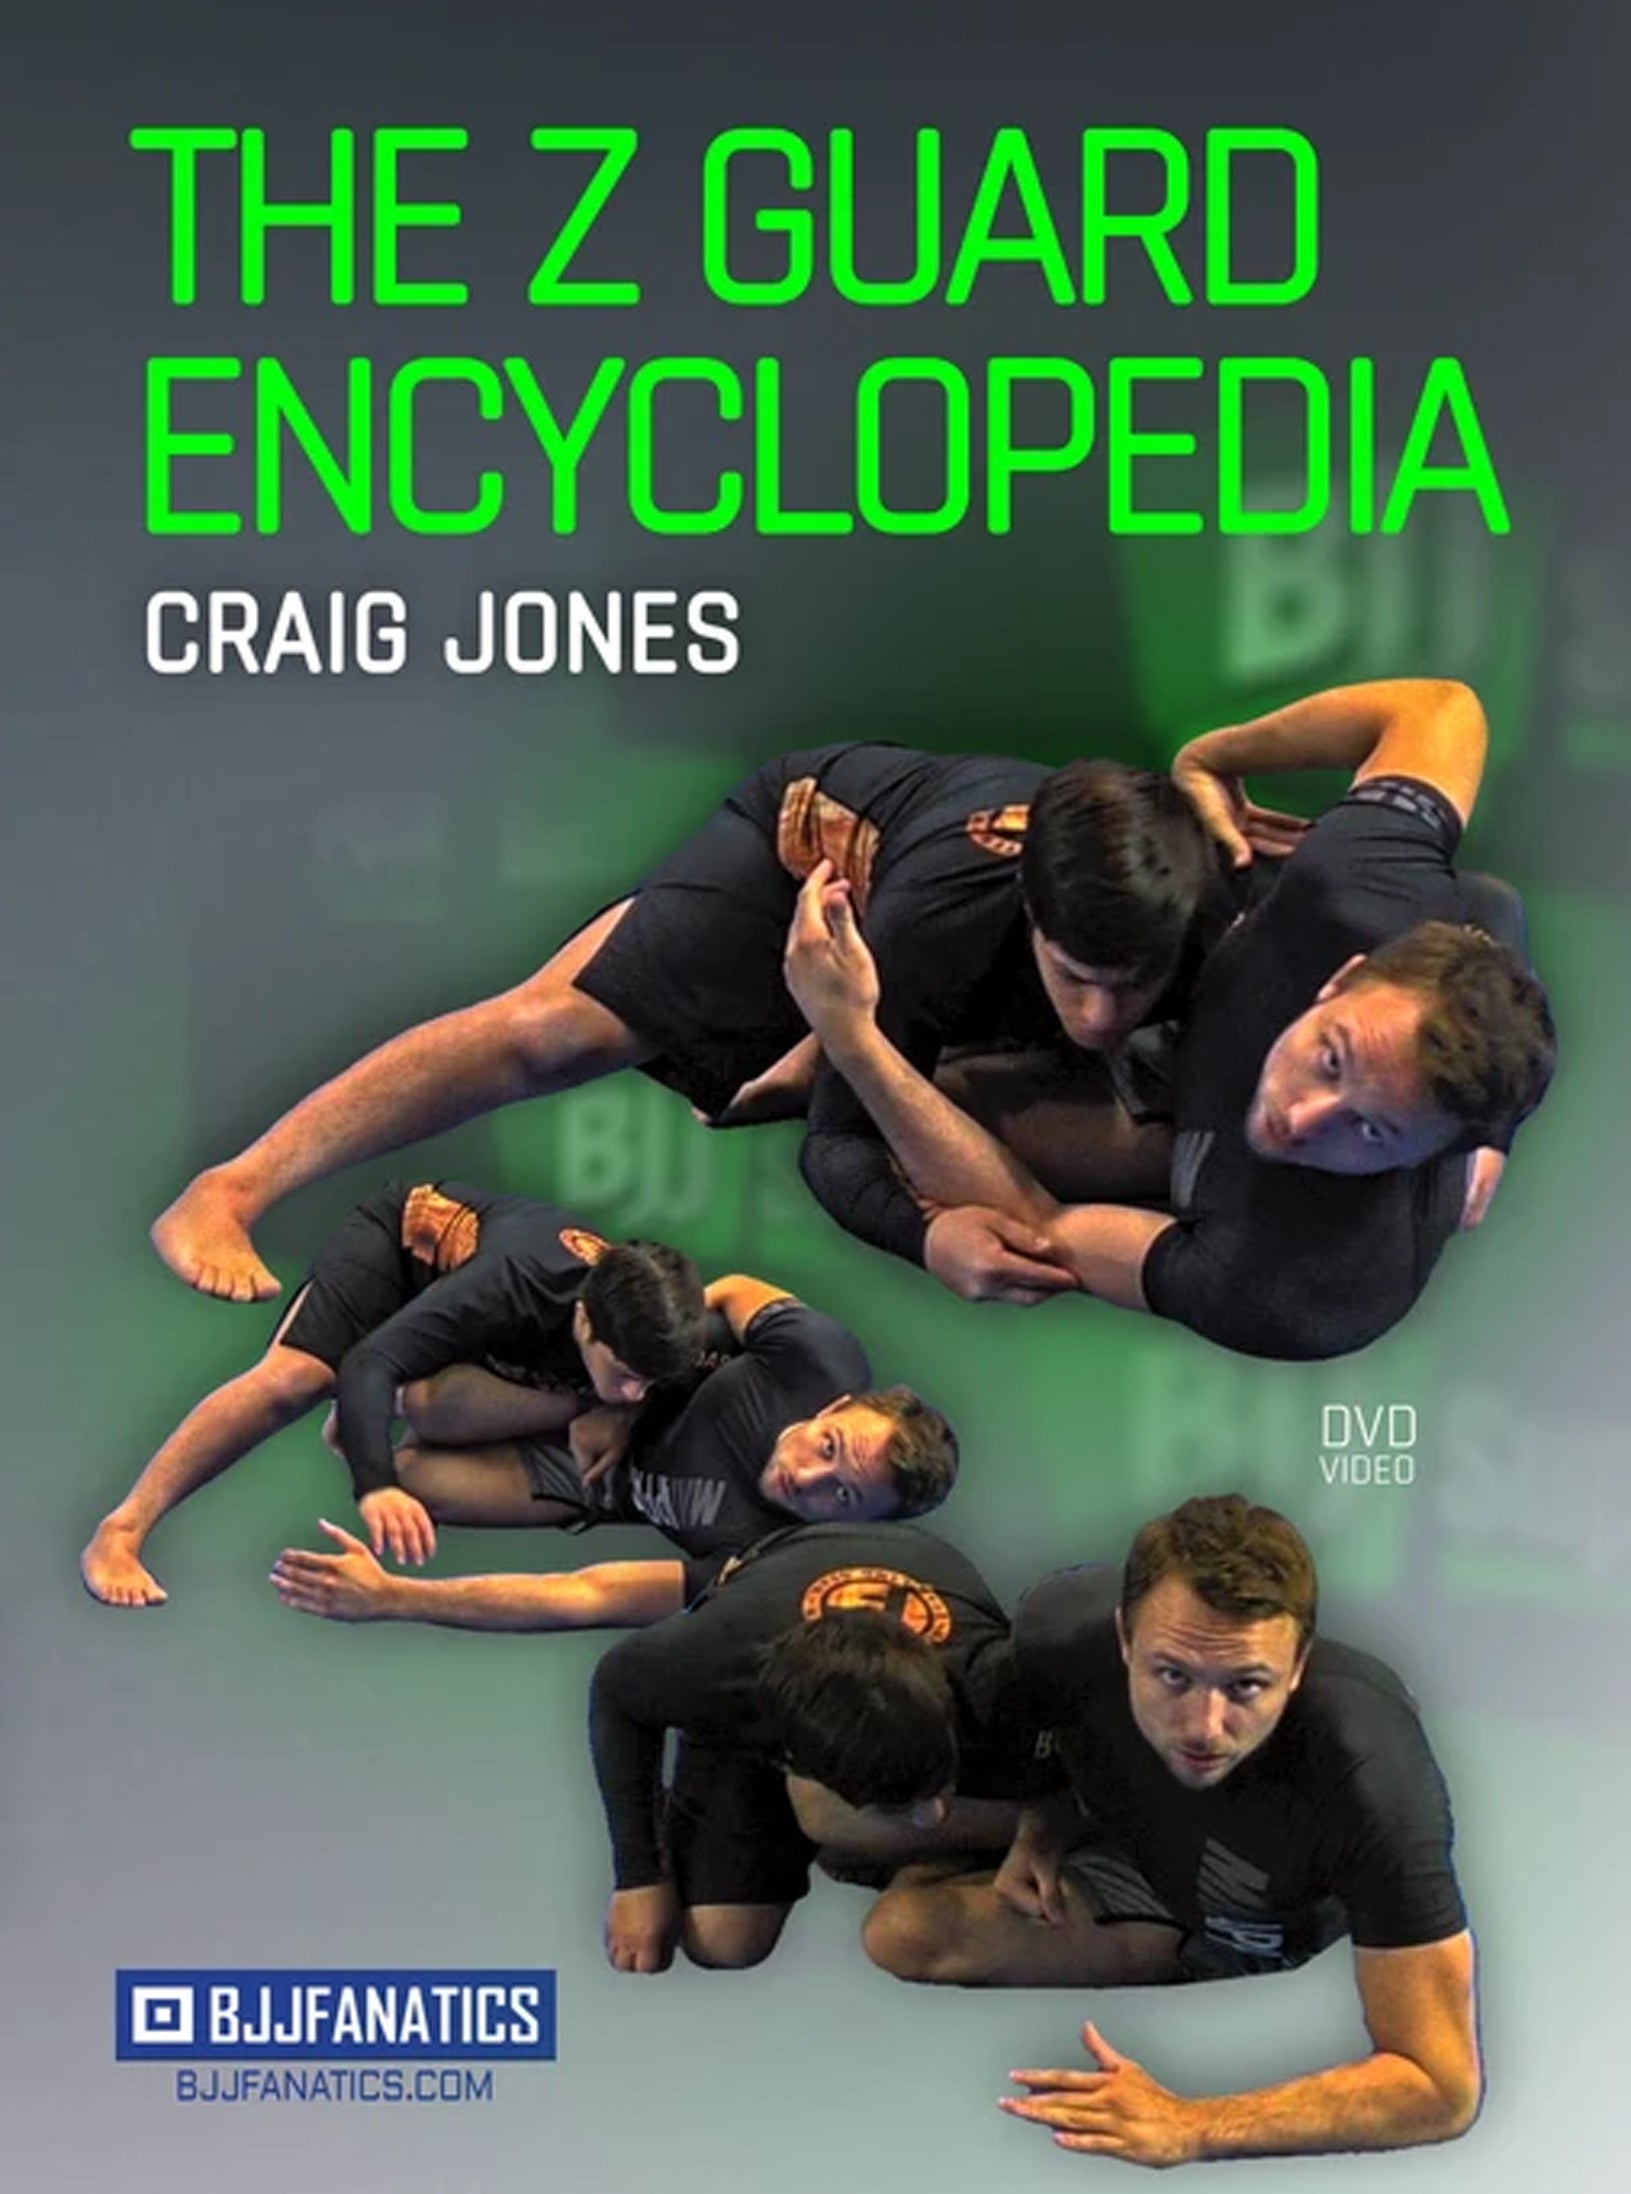 THE Z GUARD ENCYCLOPEDIA BY CRAIG JONES DVD